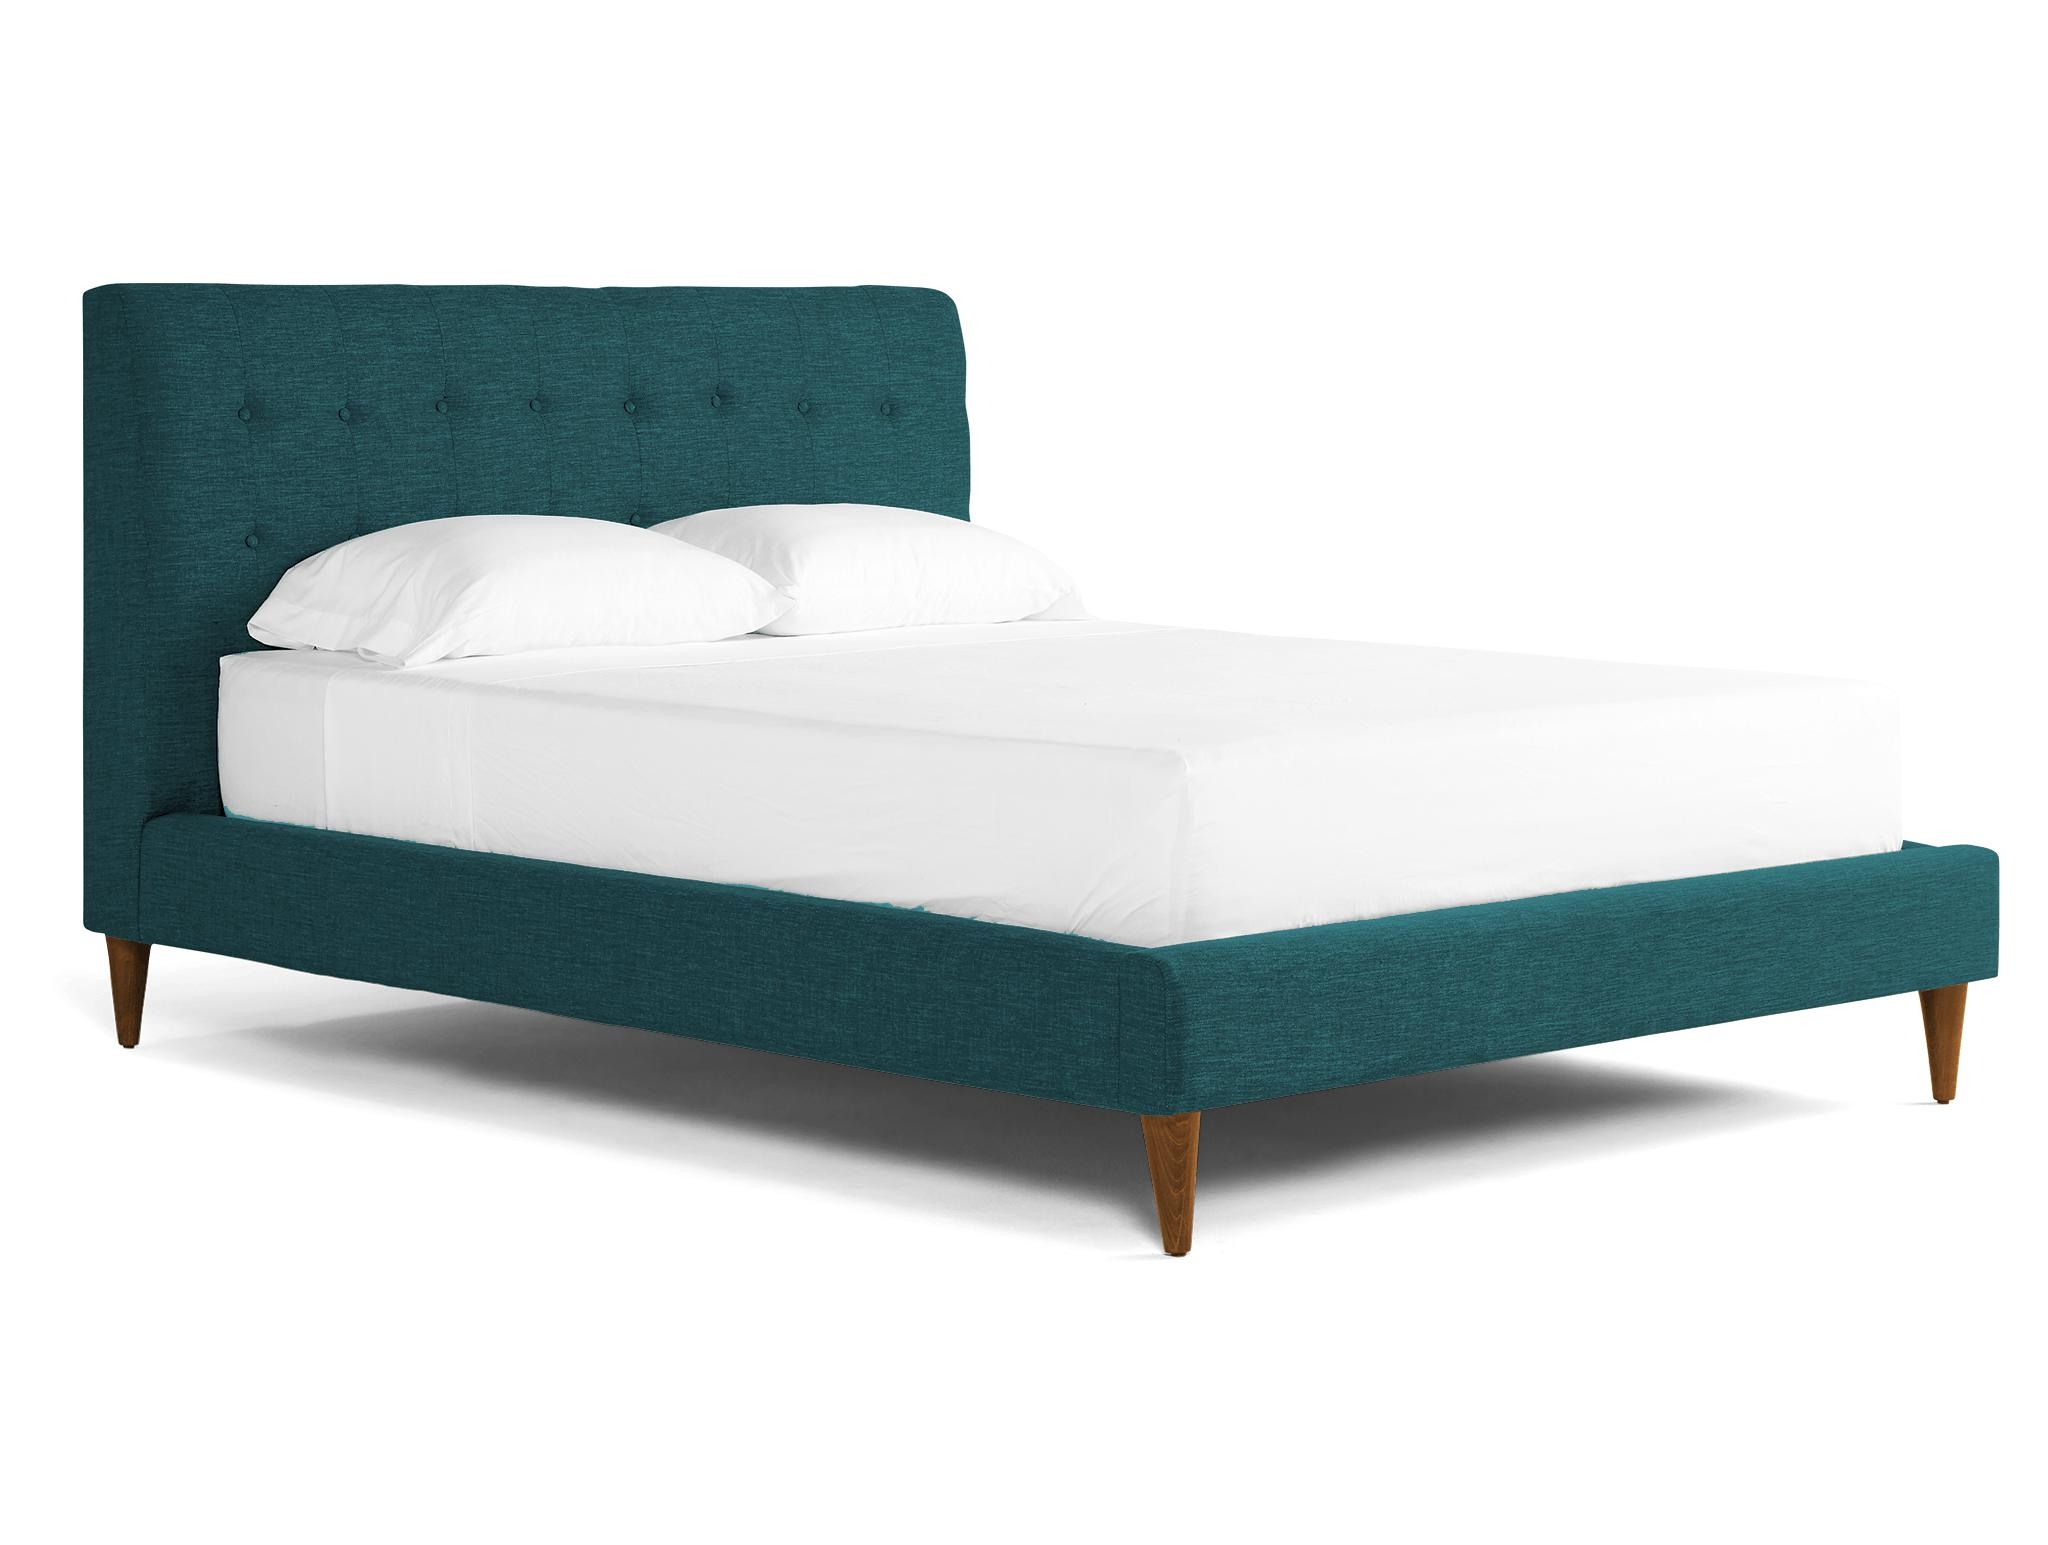 Blue Eliot Mid Century Modern Bed - Royale Peacock - Mocha - Eastern King - Image 1